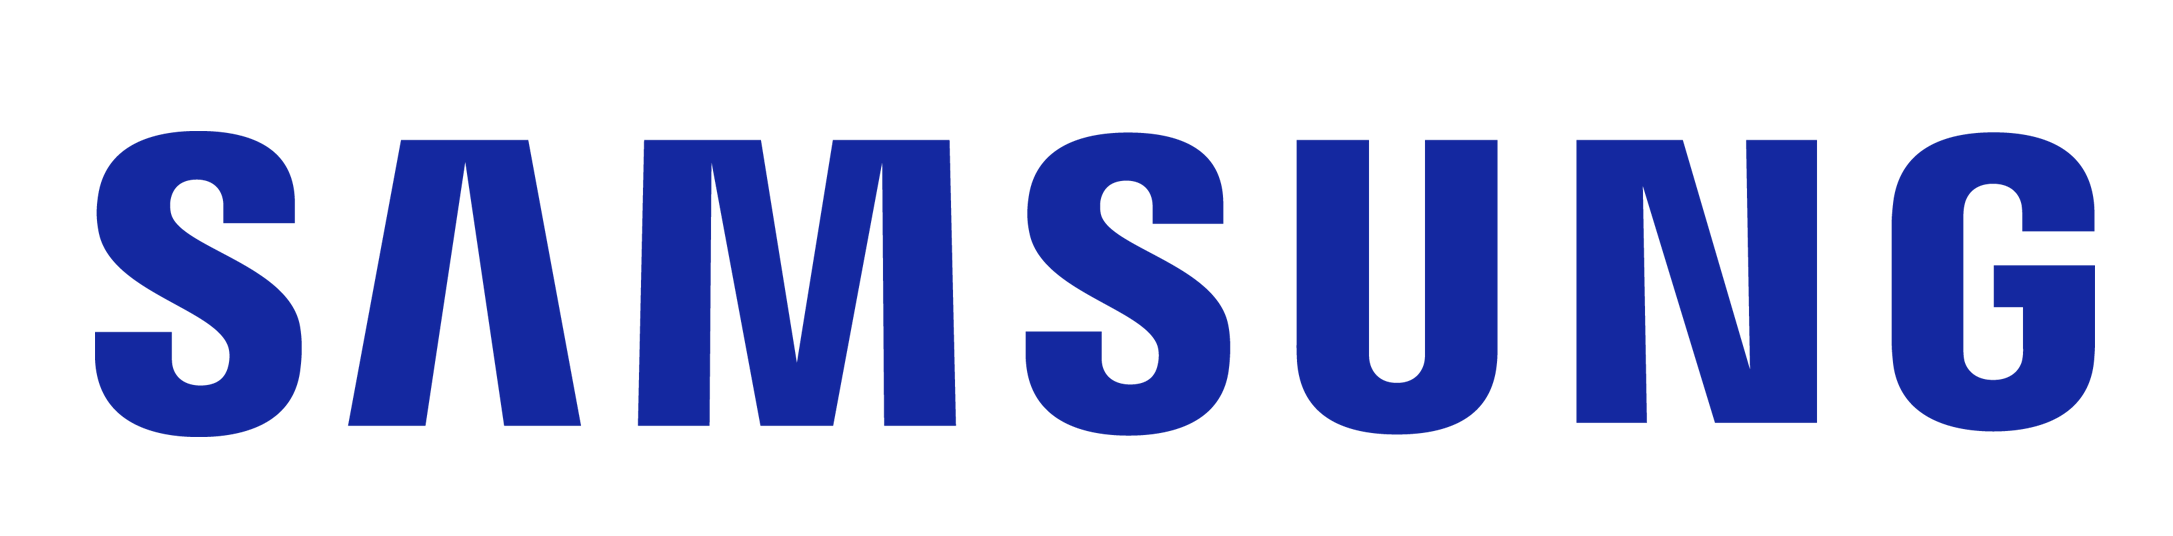 Samsung Mobile Phone Transpar